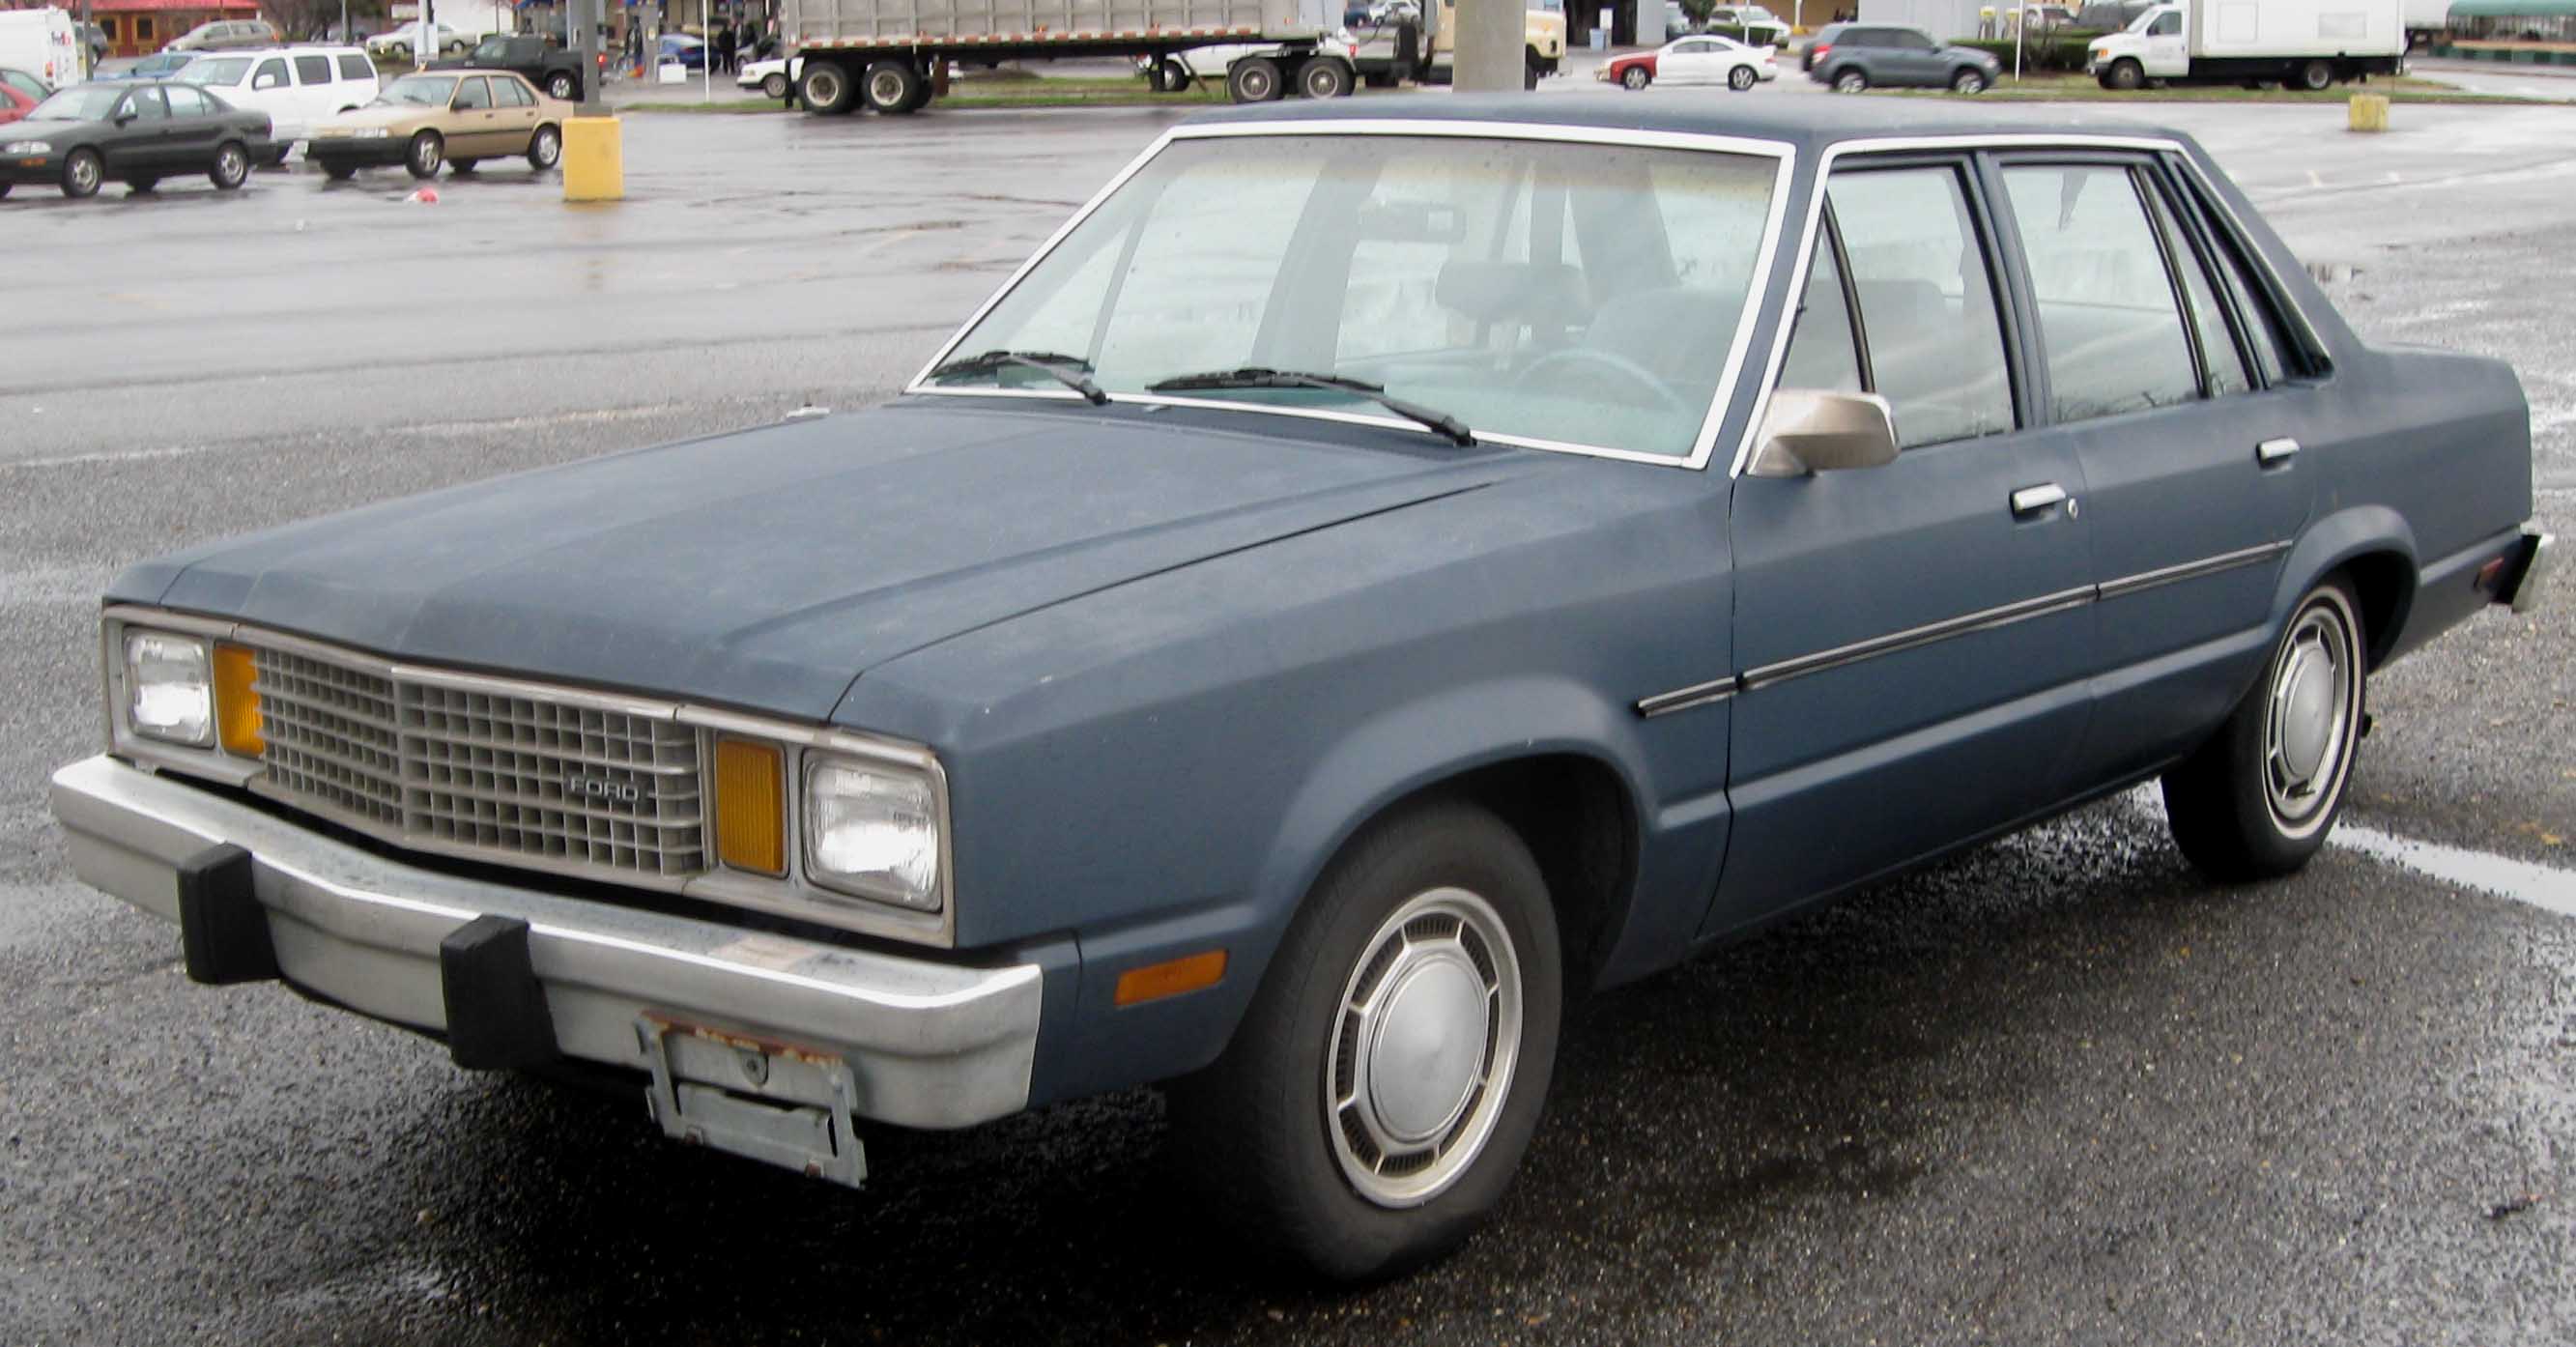 File:Ford Fairmont sedan 2.jpg - Wikipedia